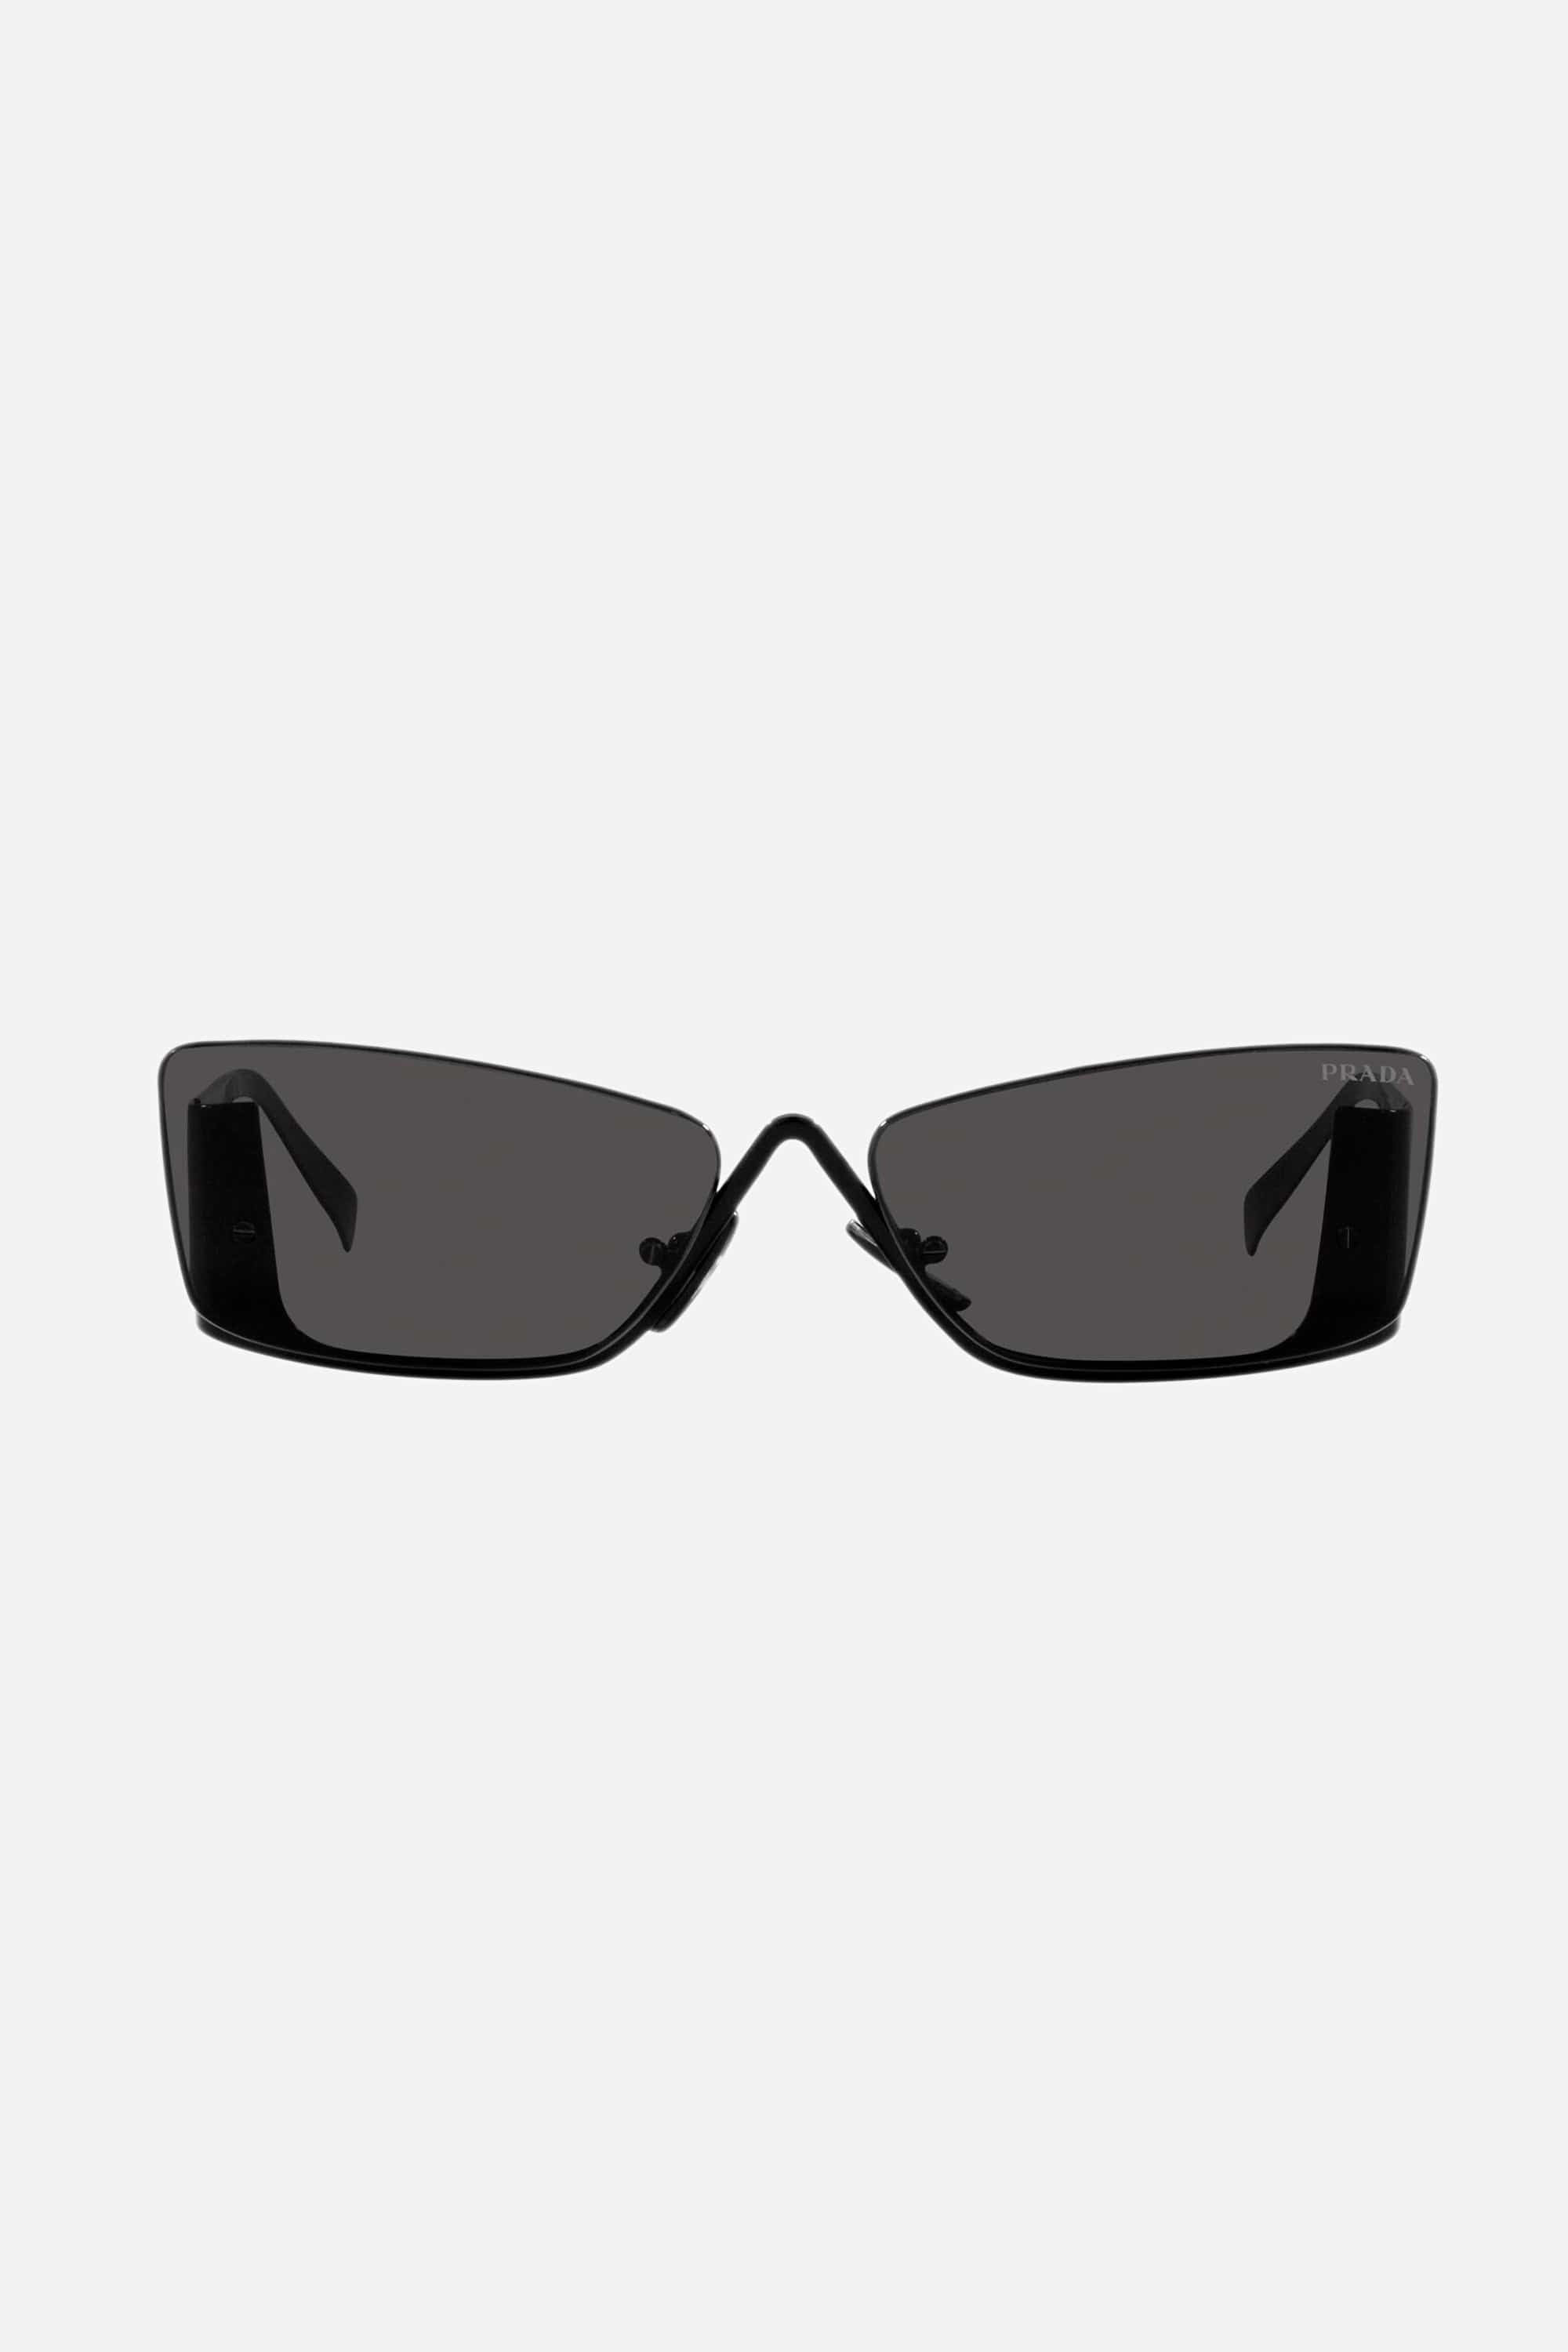 Prada flat top black sunglasses women Catwalk - Eyewear Club